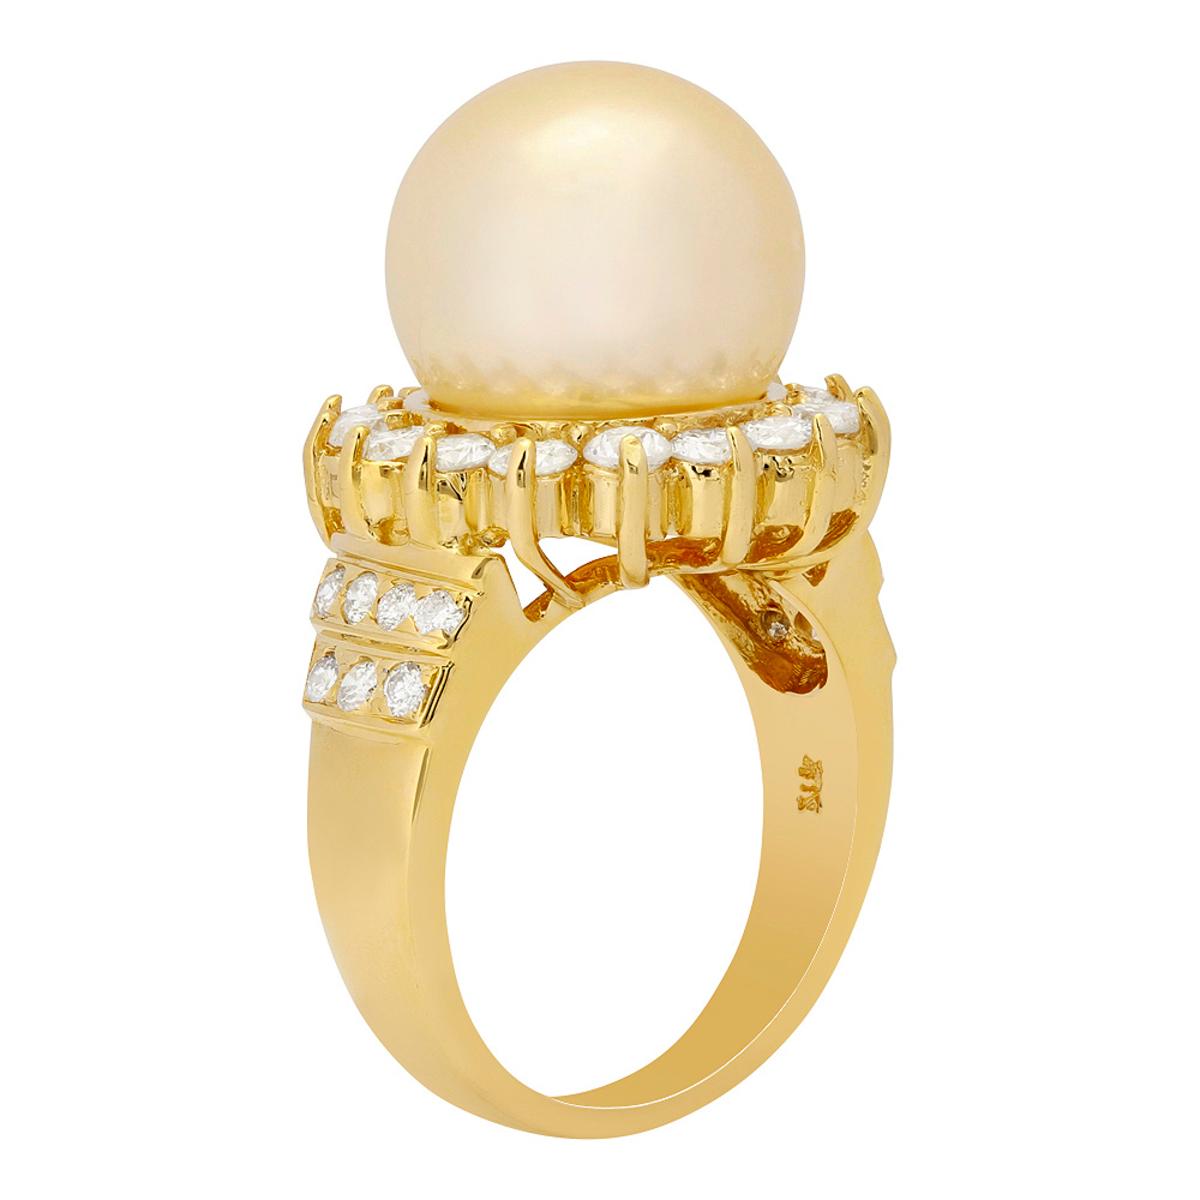 14k Yellow Gold 13mm Pearl 1.73ct Diamond Ring